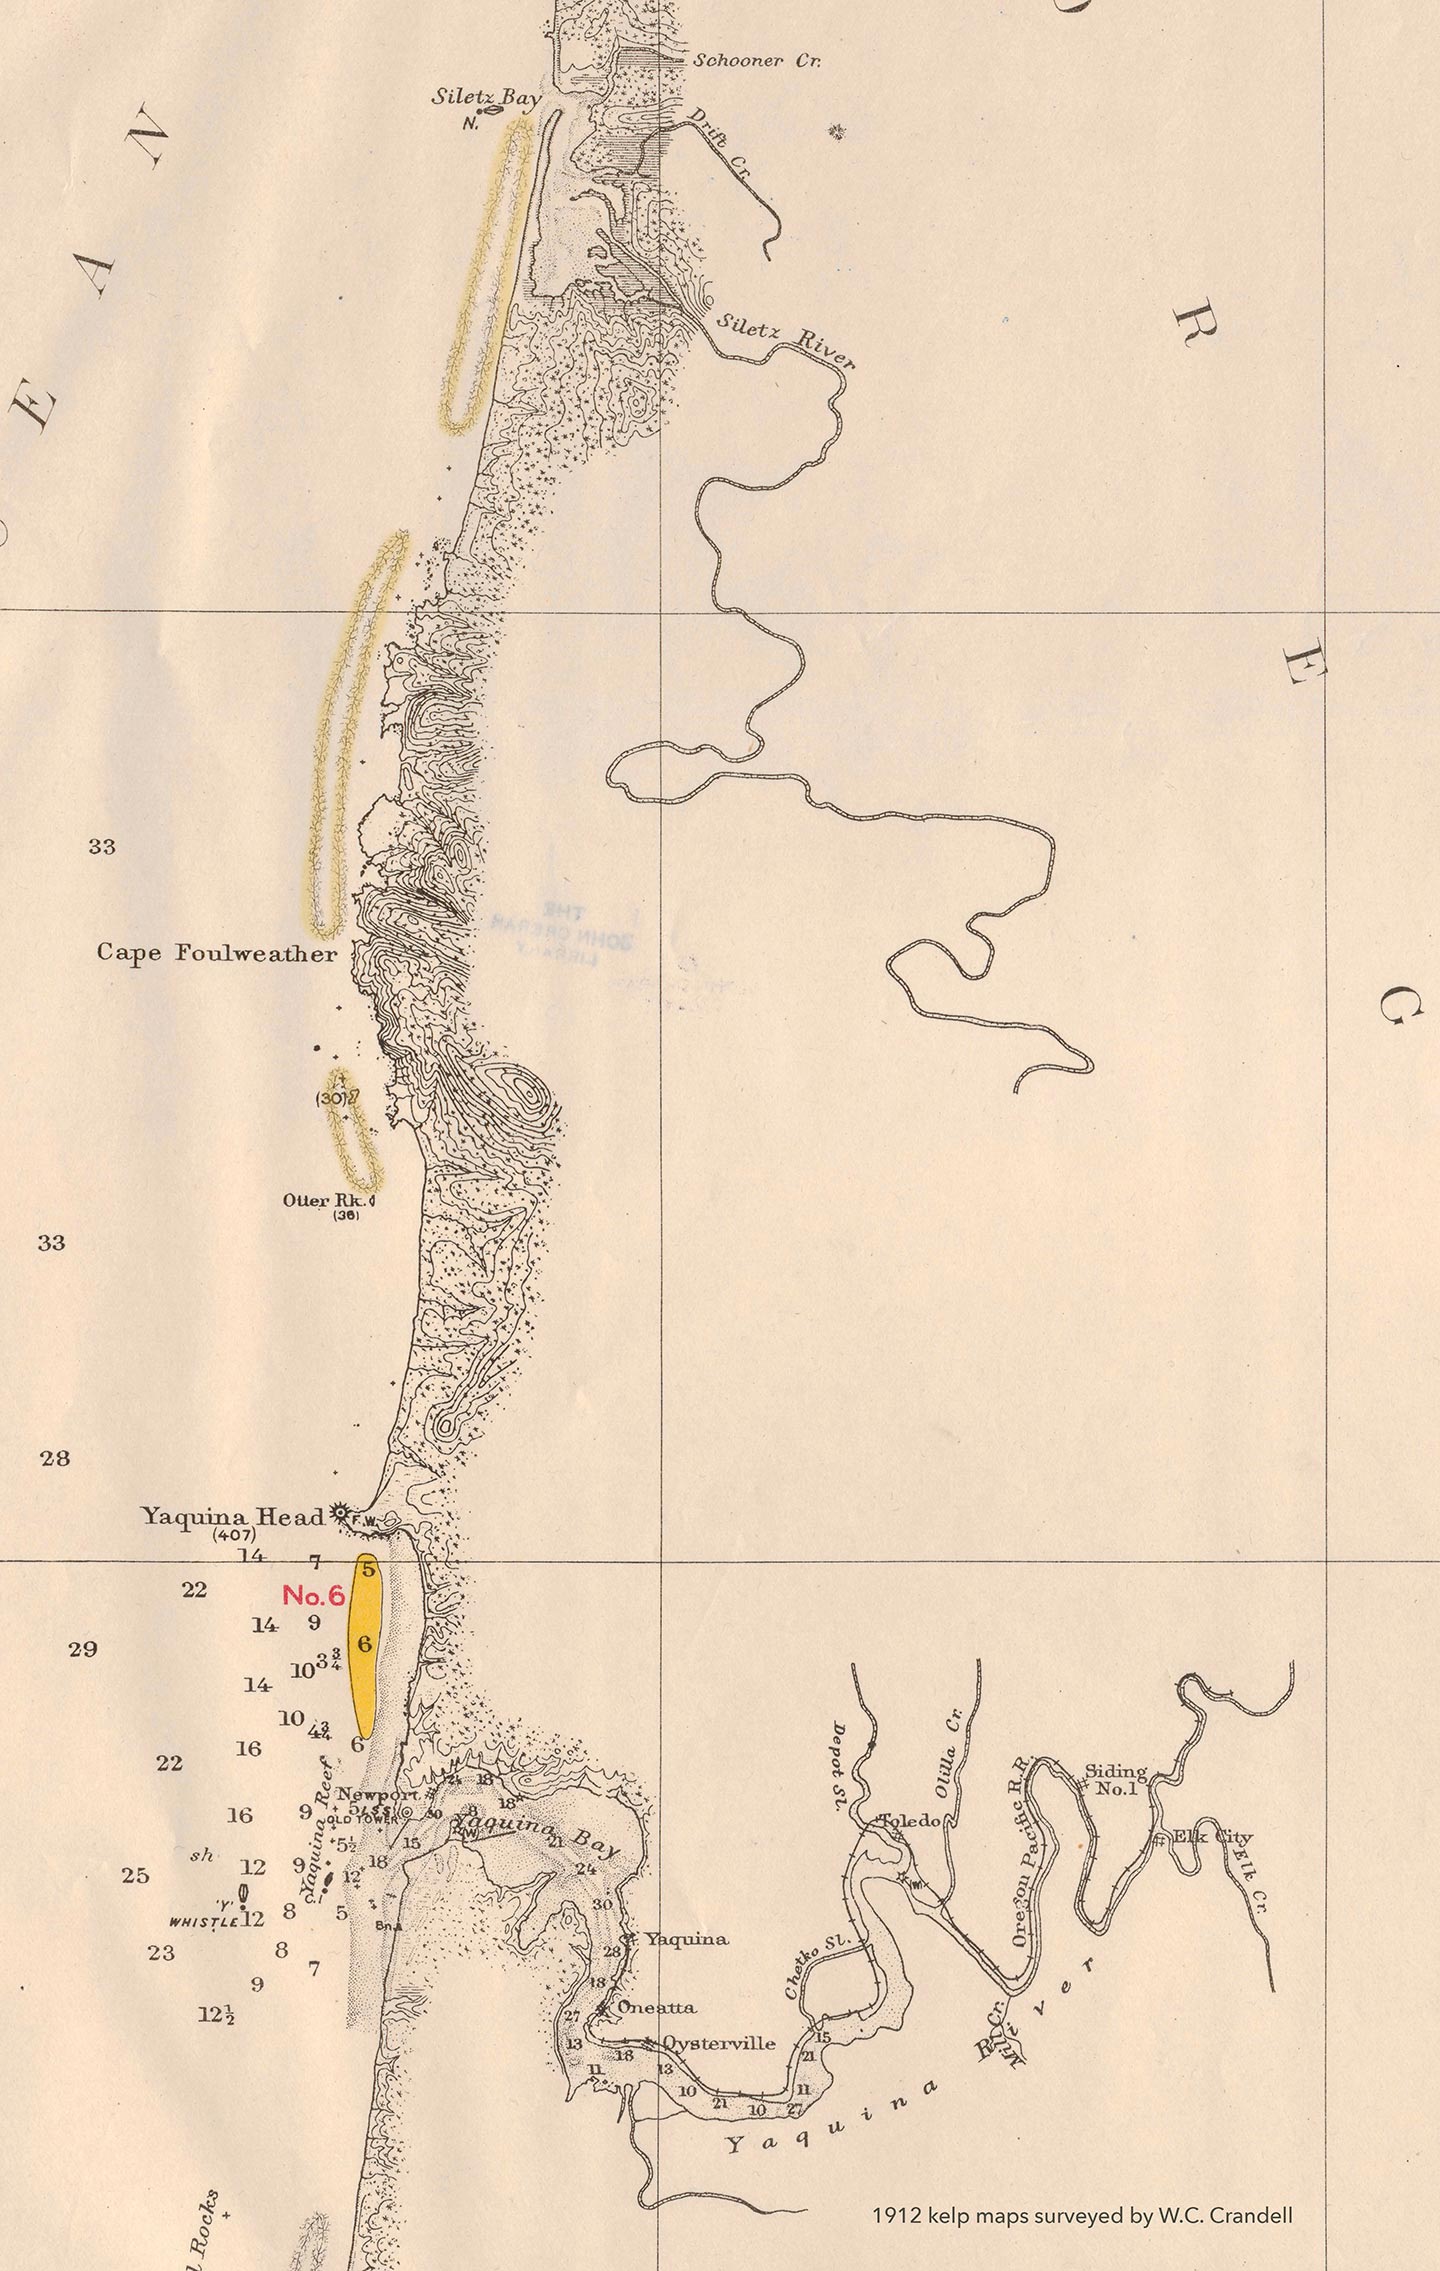 1912 kelp maps showing kelp beds